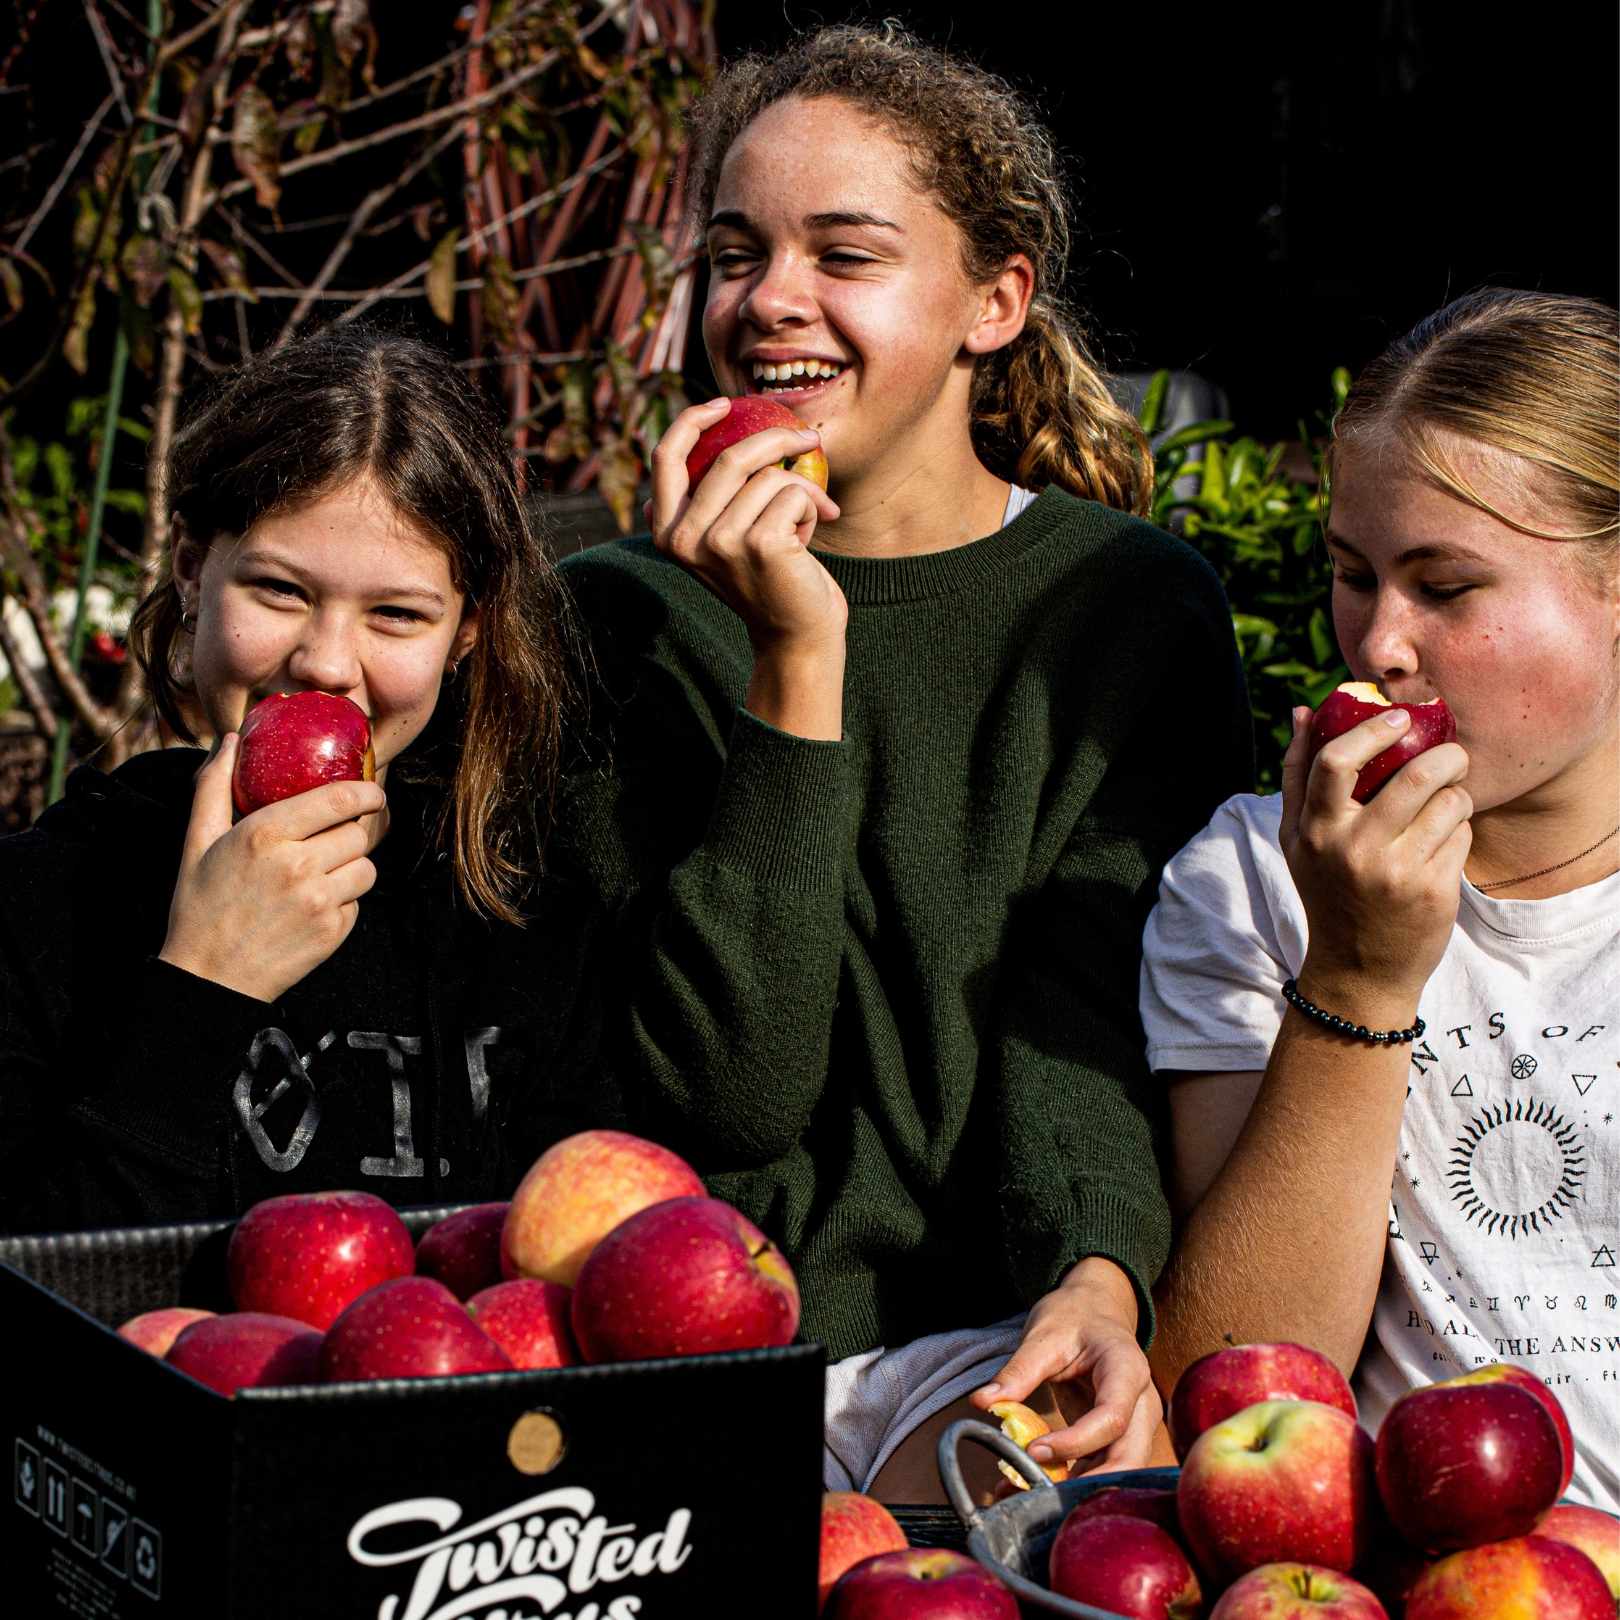 Buy Apples - Sansa Online NZ